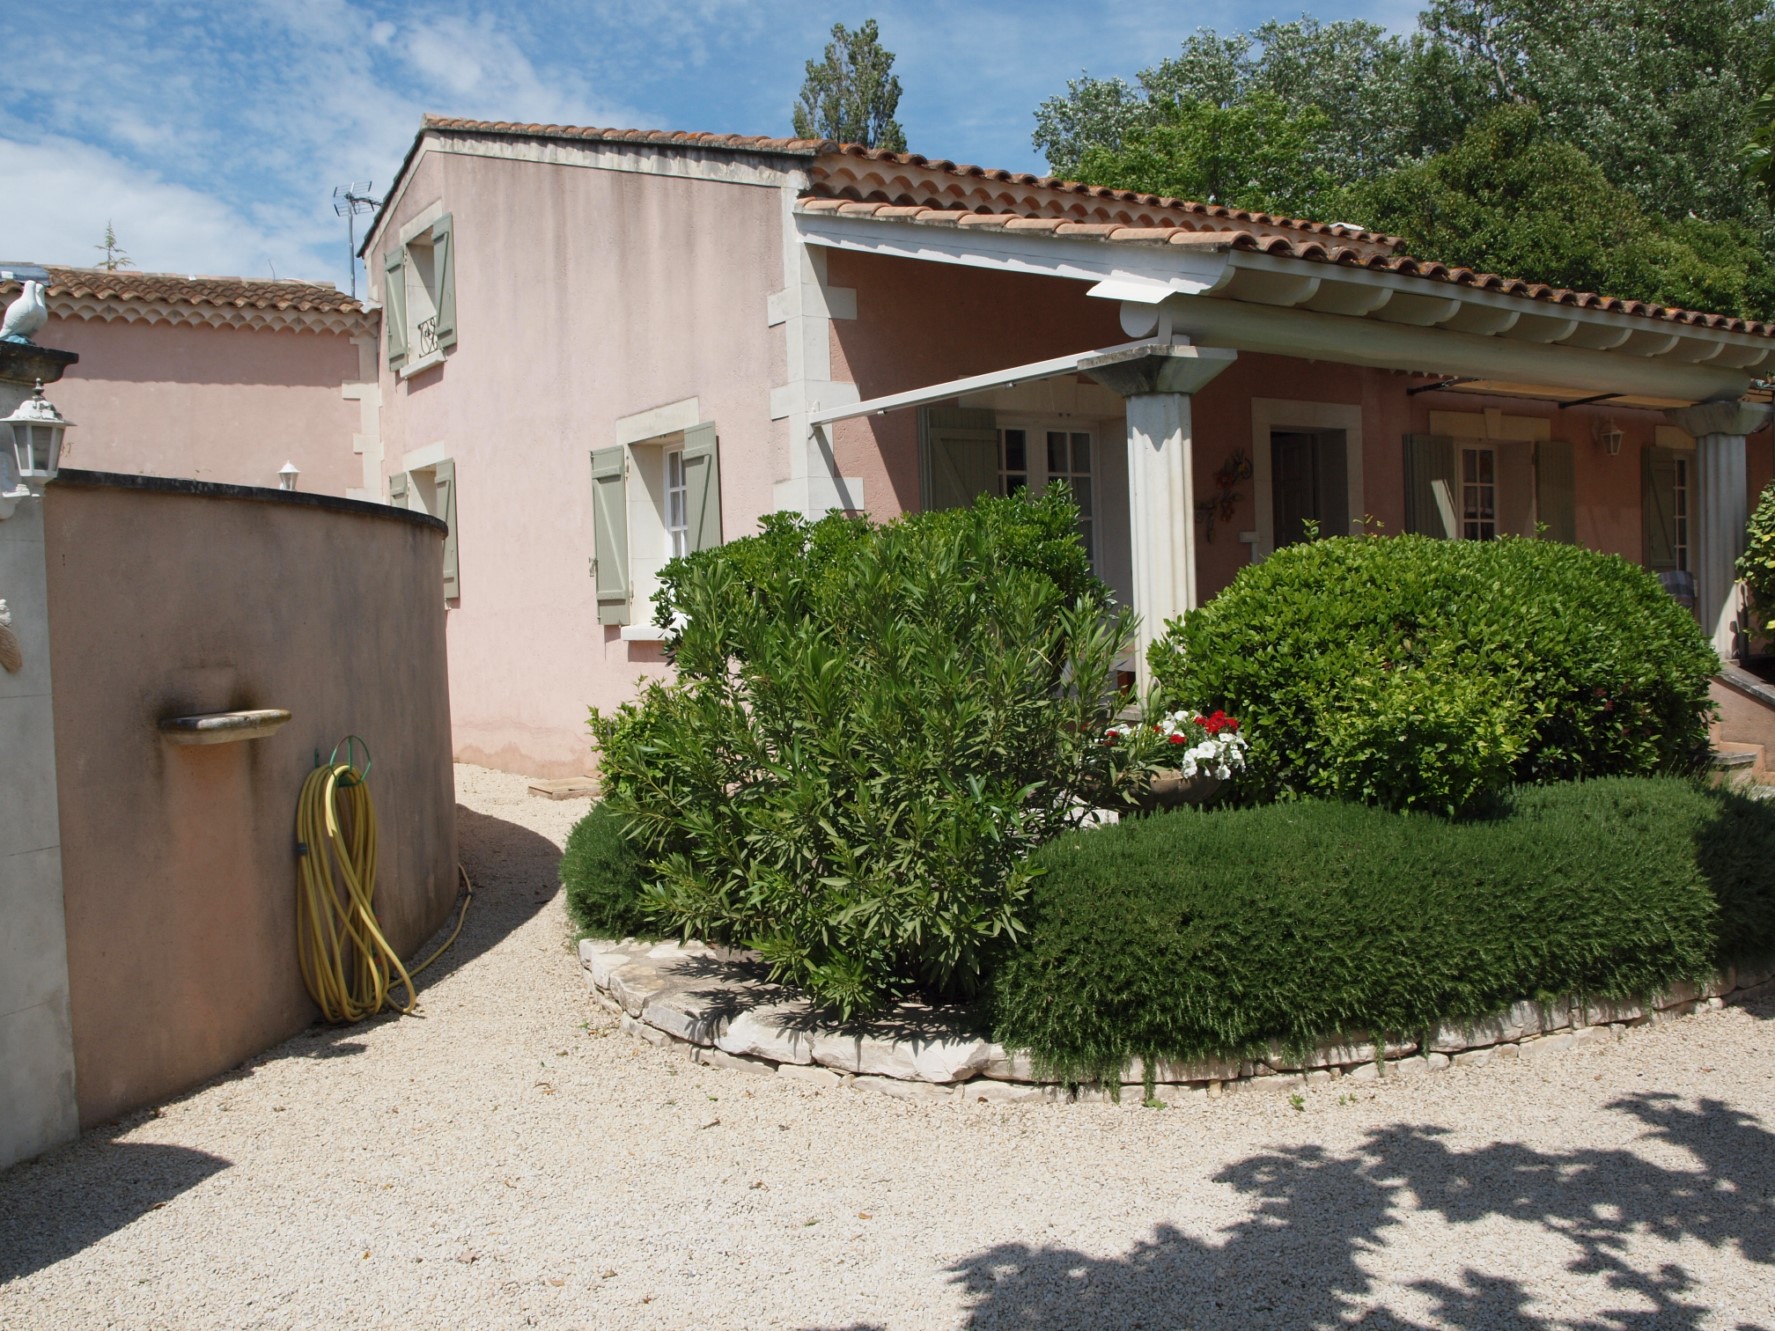 For sale in Isle-sur-la-Sorgue, contemporary 2 small houses for sale